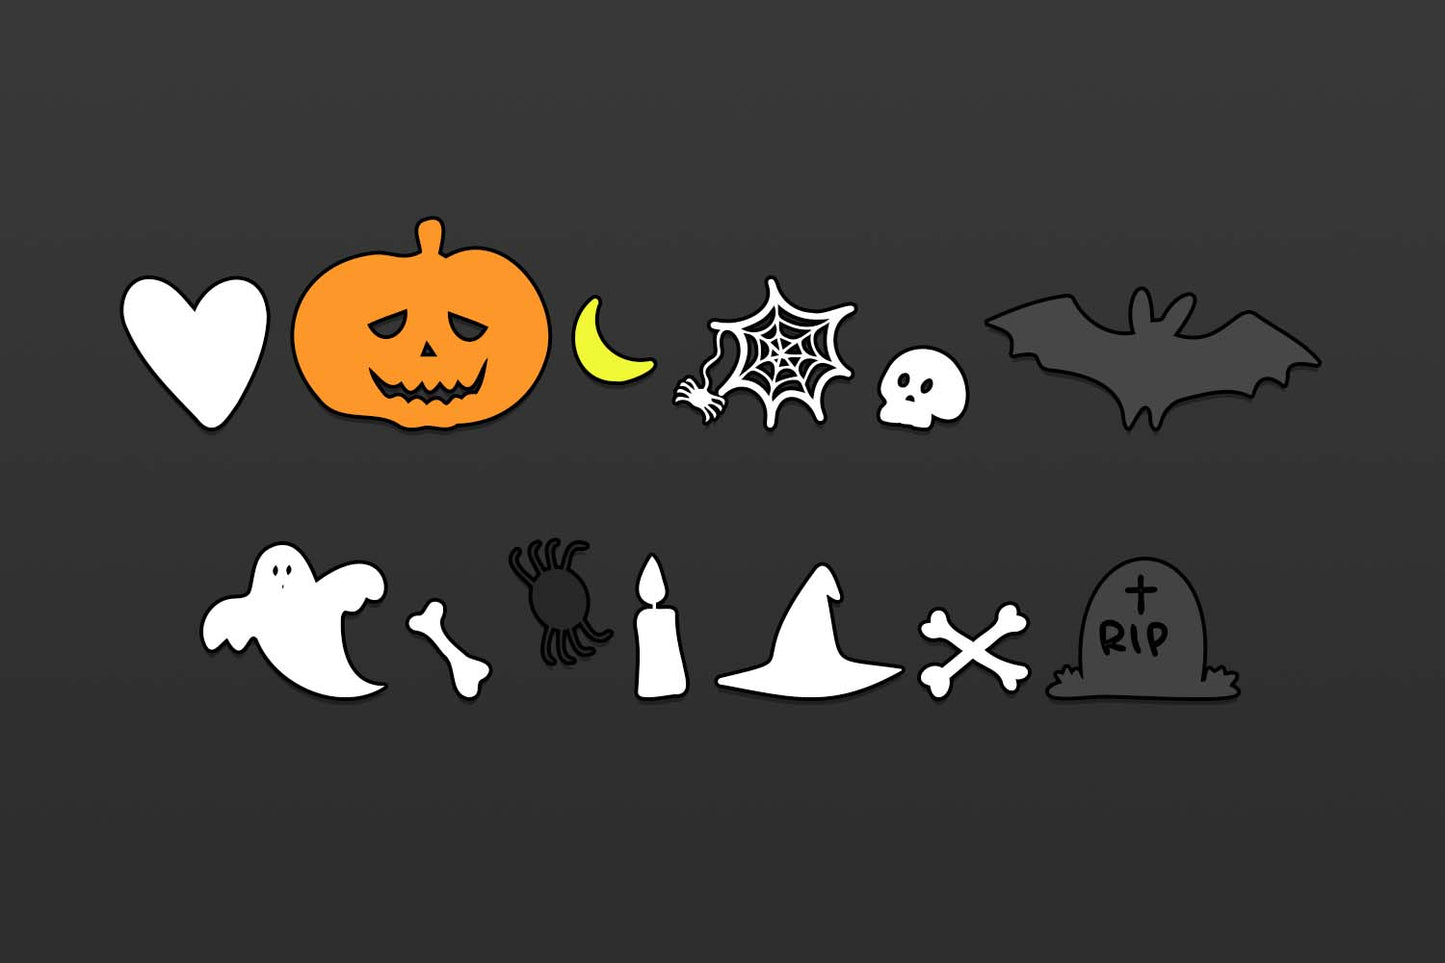 Halloween Bones - A Spooky Font With Doodles